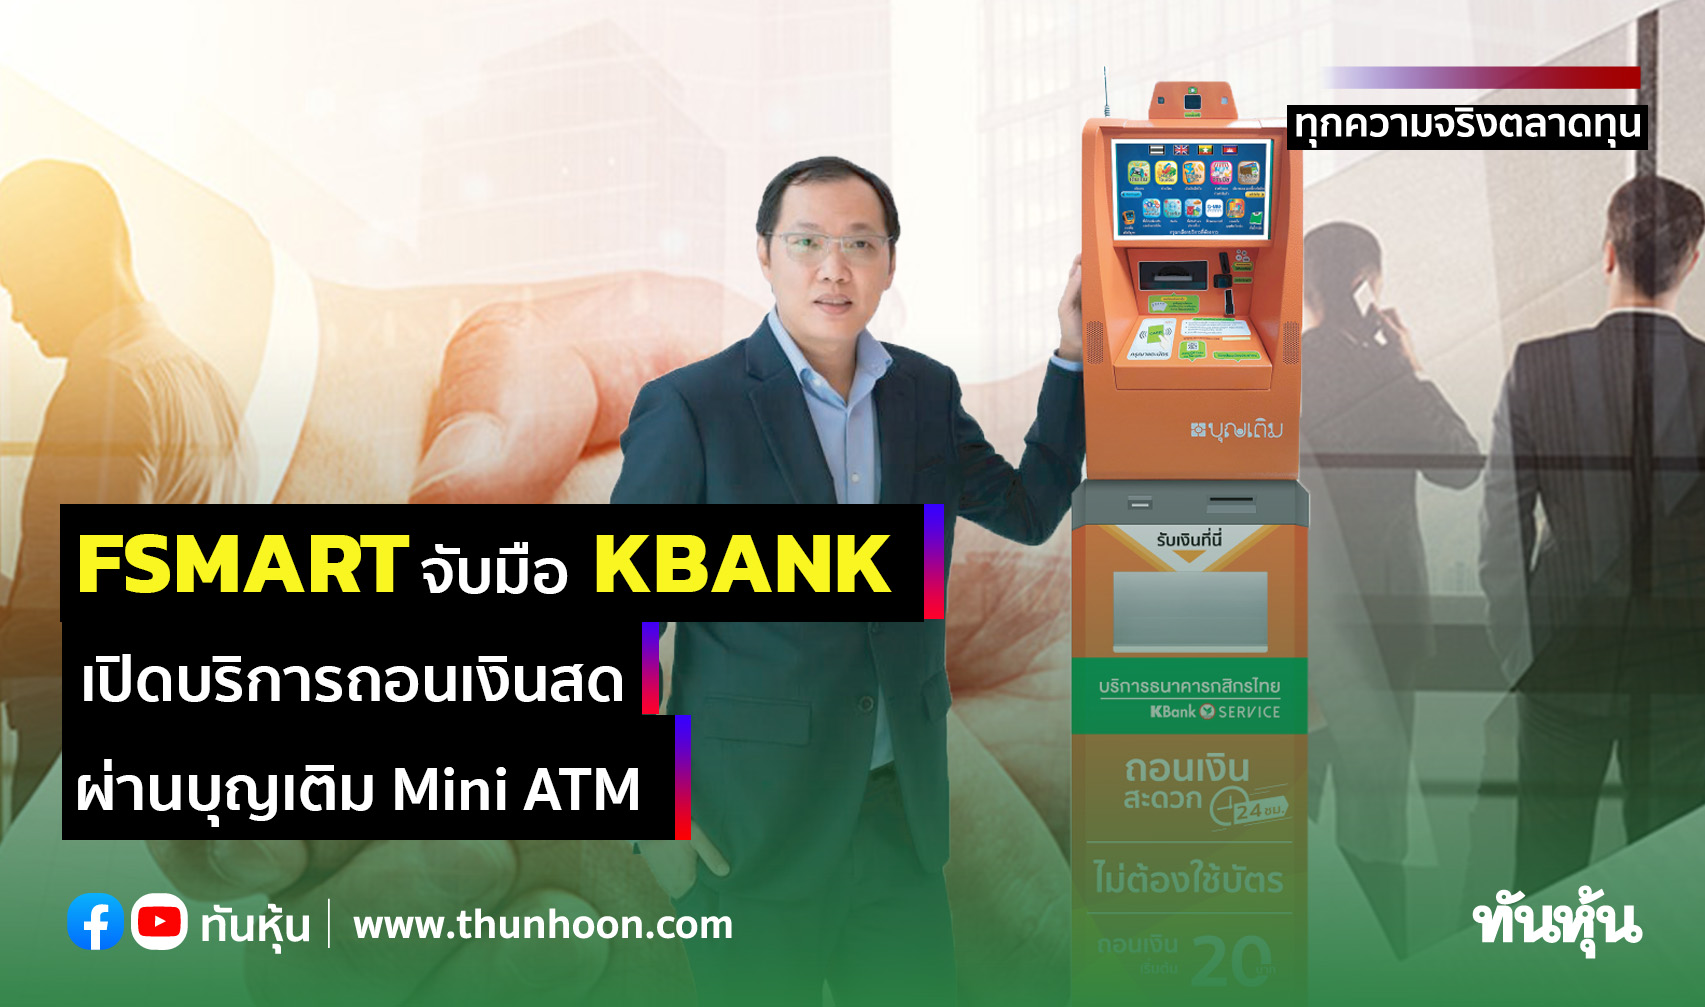 FSMART จับมือ KBANK  เปิดบริการถอนเงินสดผ่านบุญเติม Mini ATM